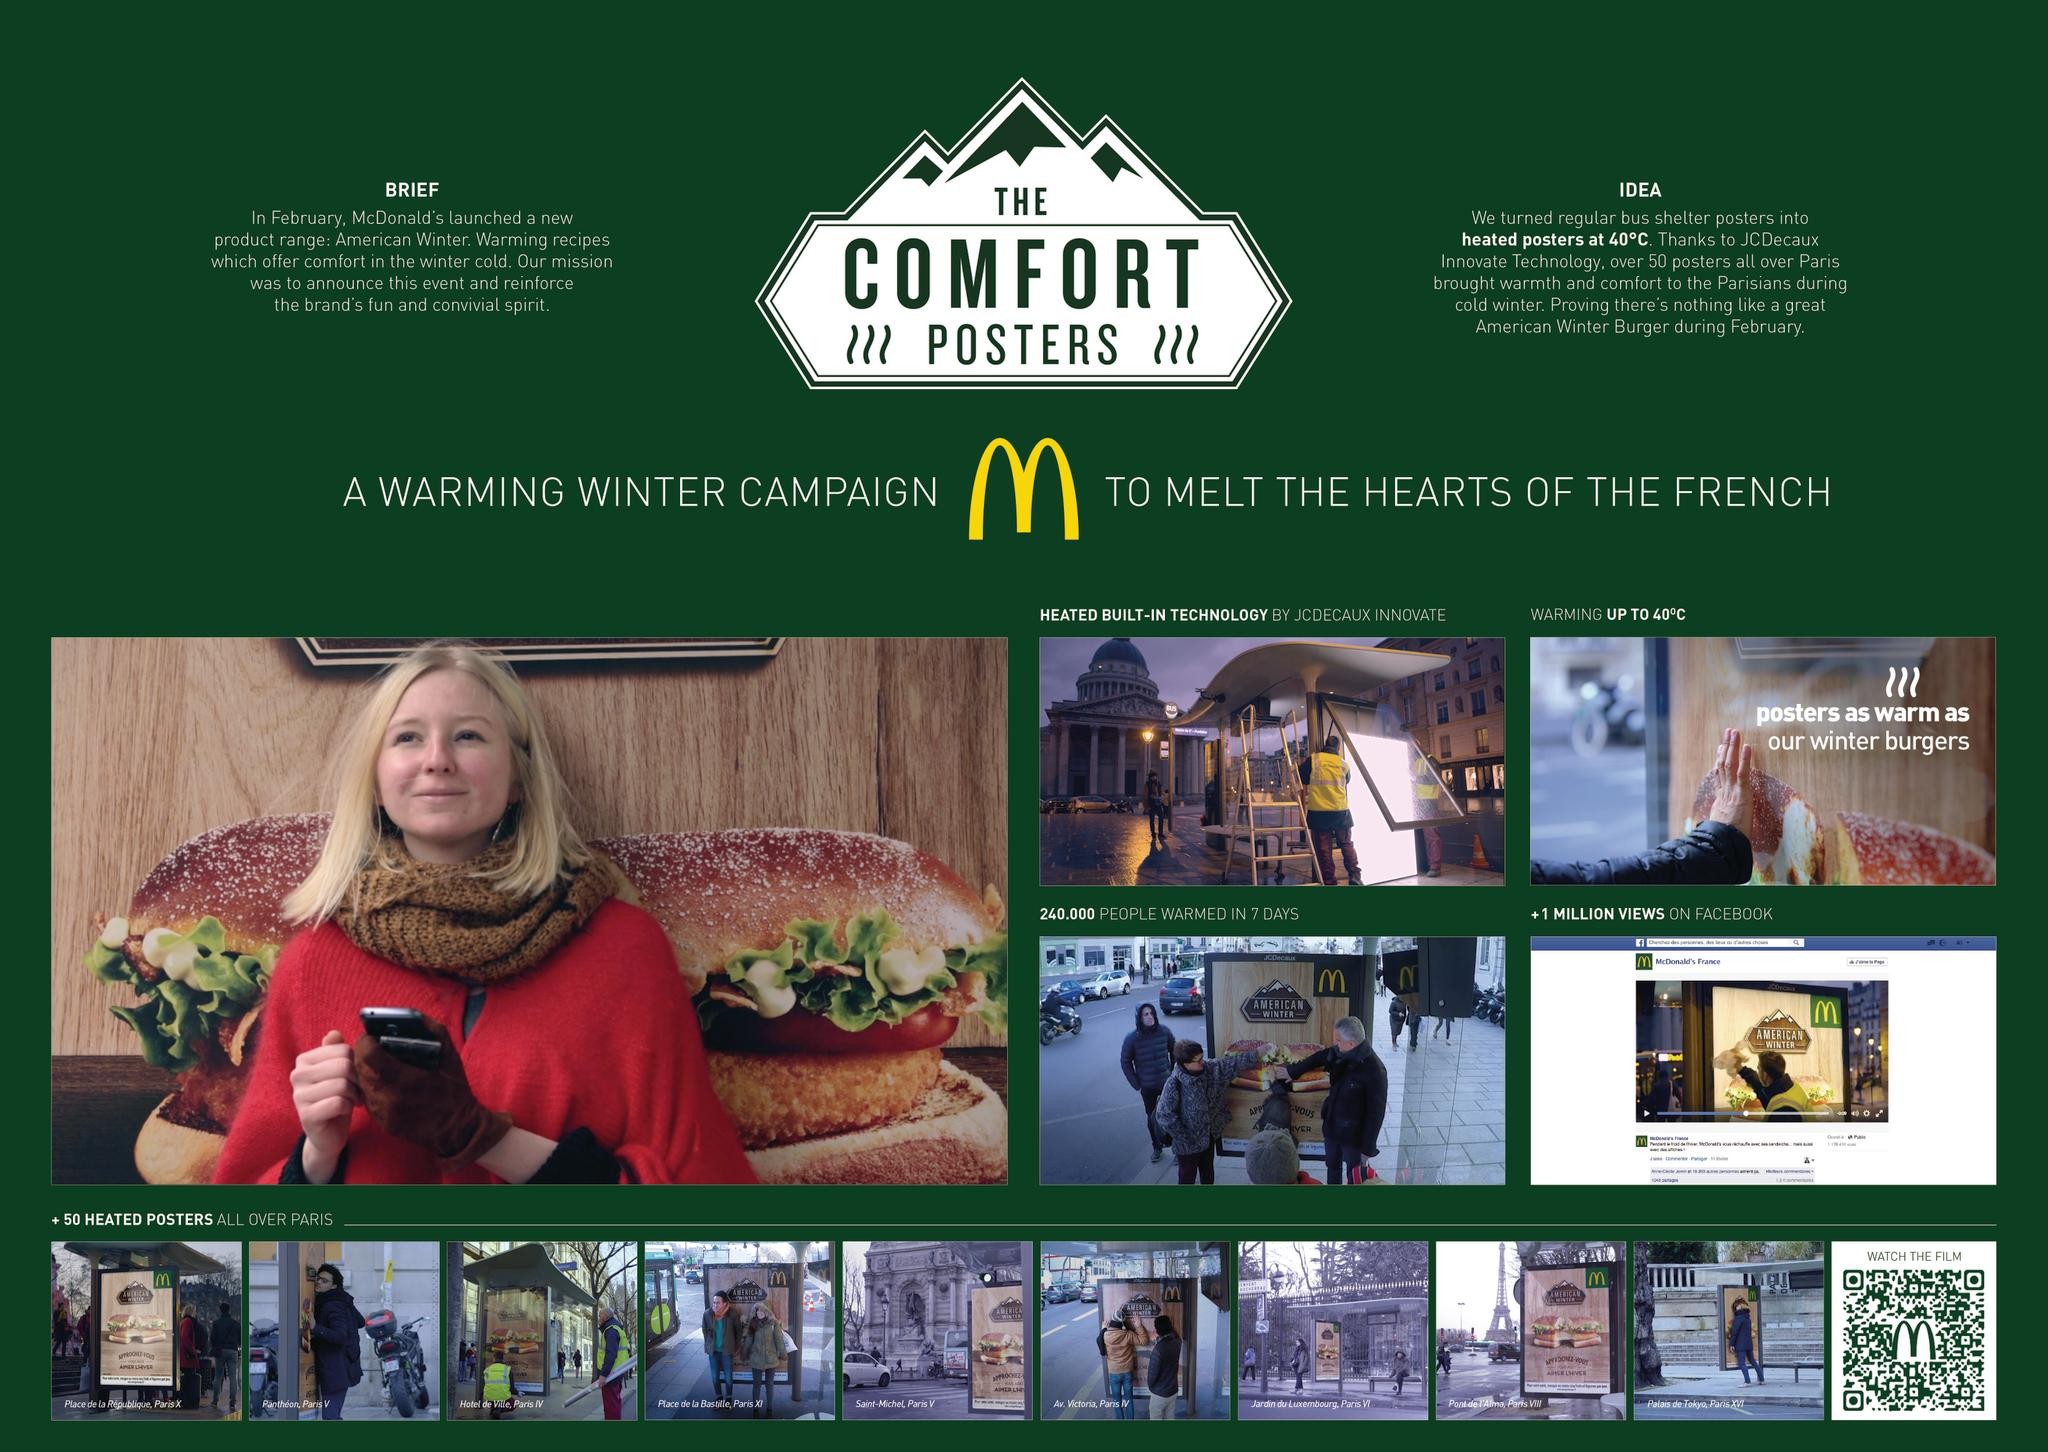 McDonald's - The comfort posters